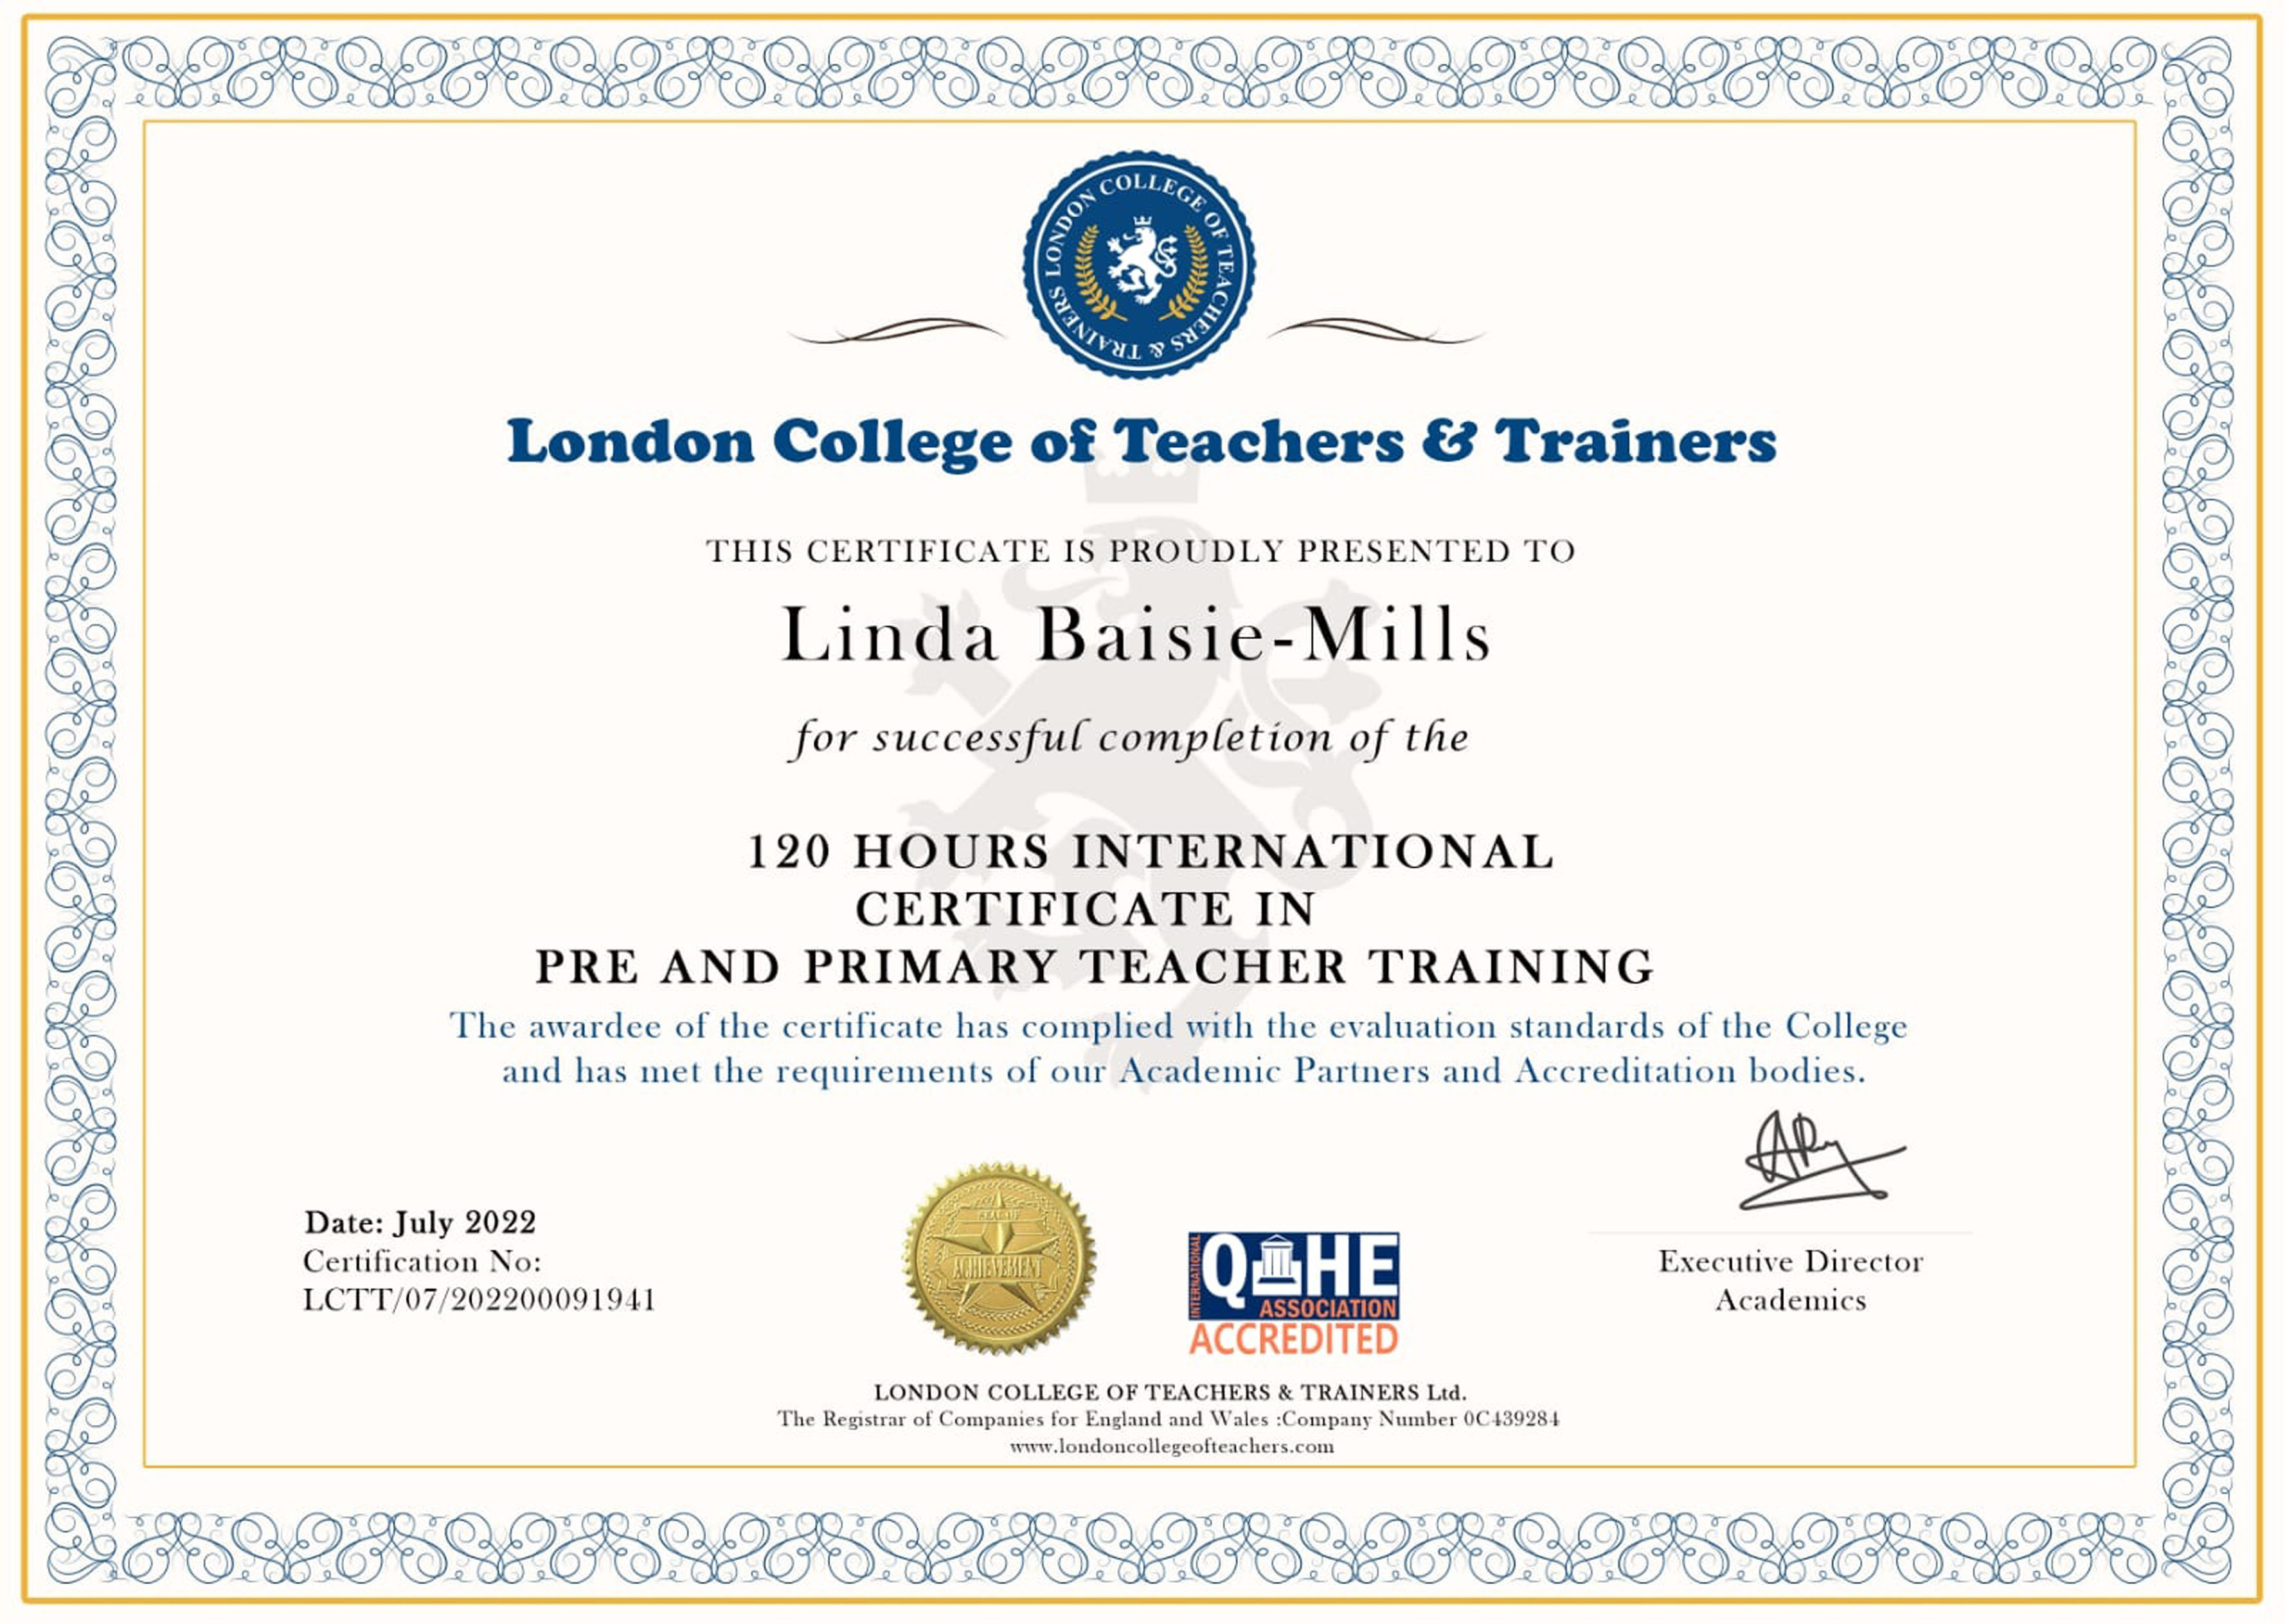 London College of Teachers - Diploma Certificate